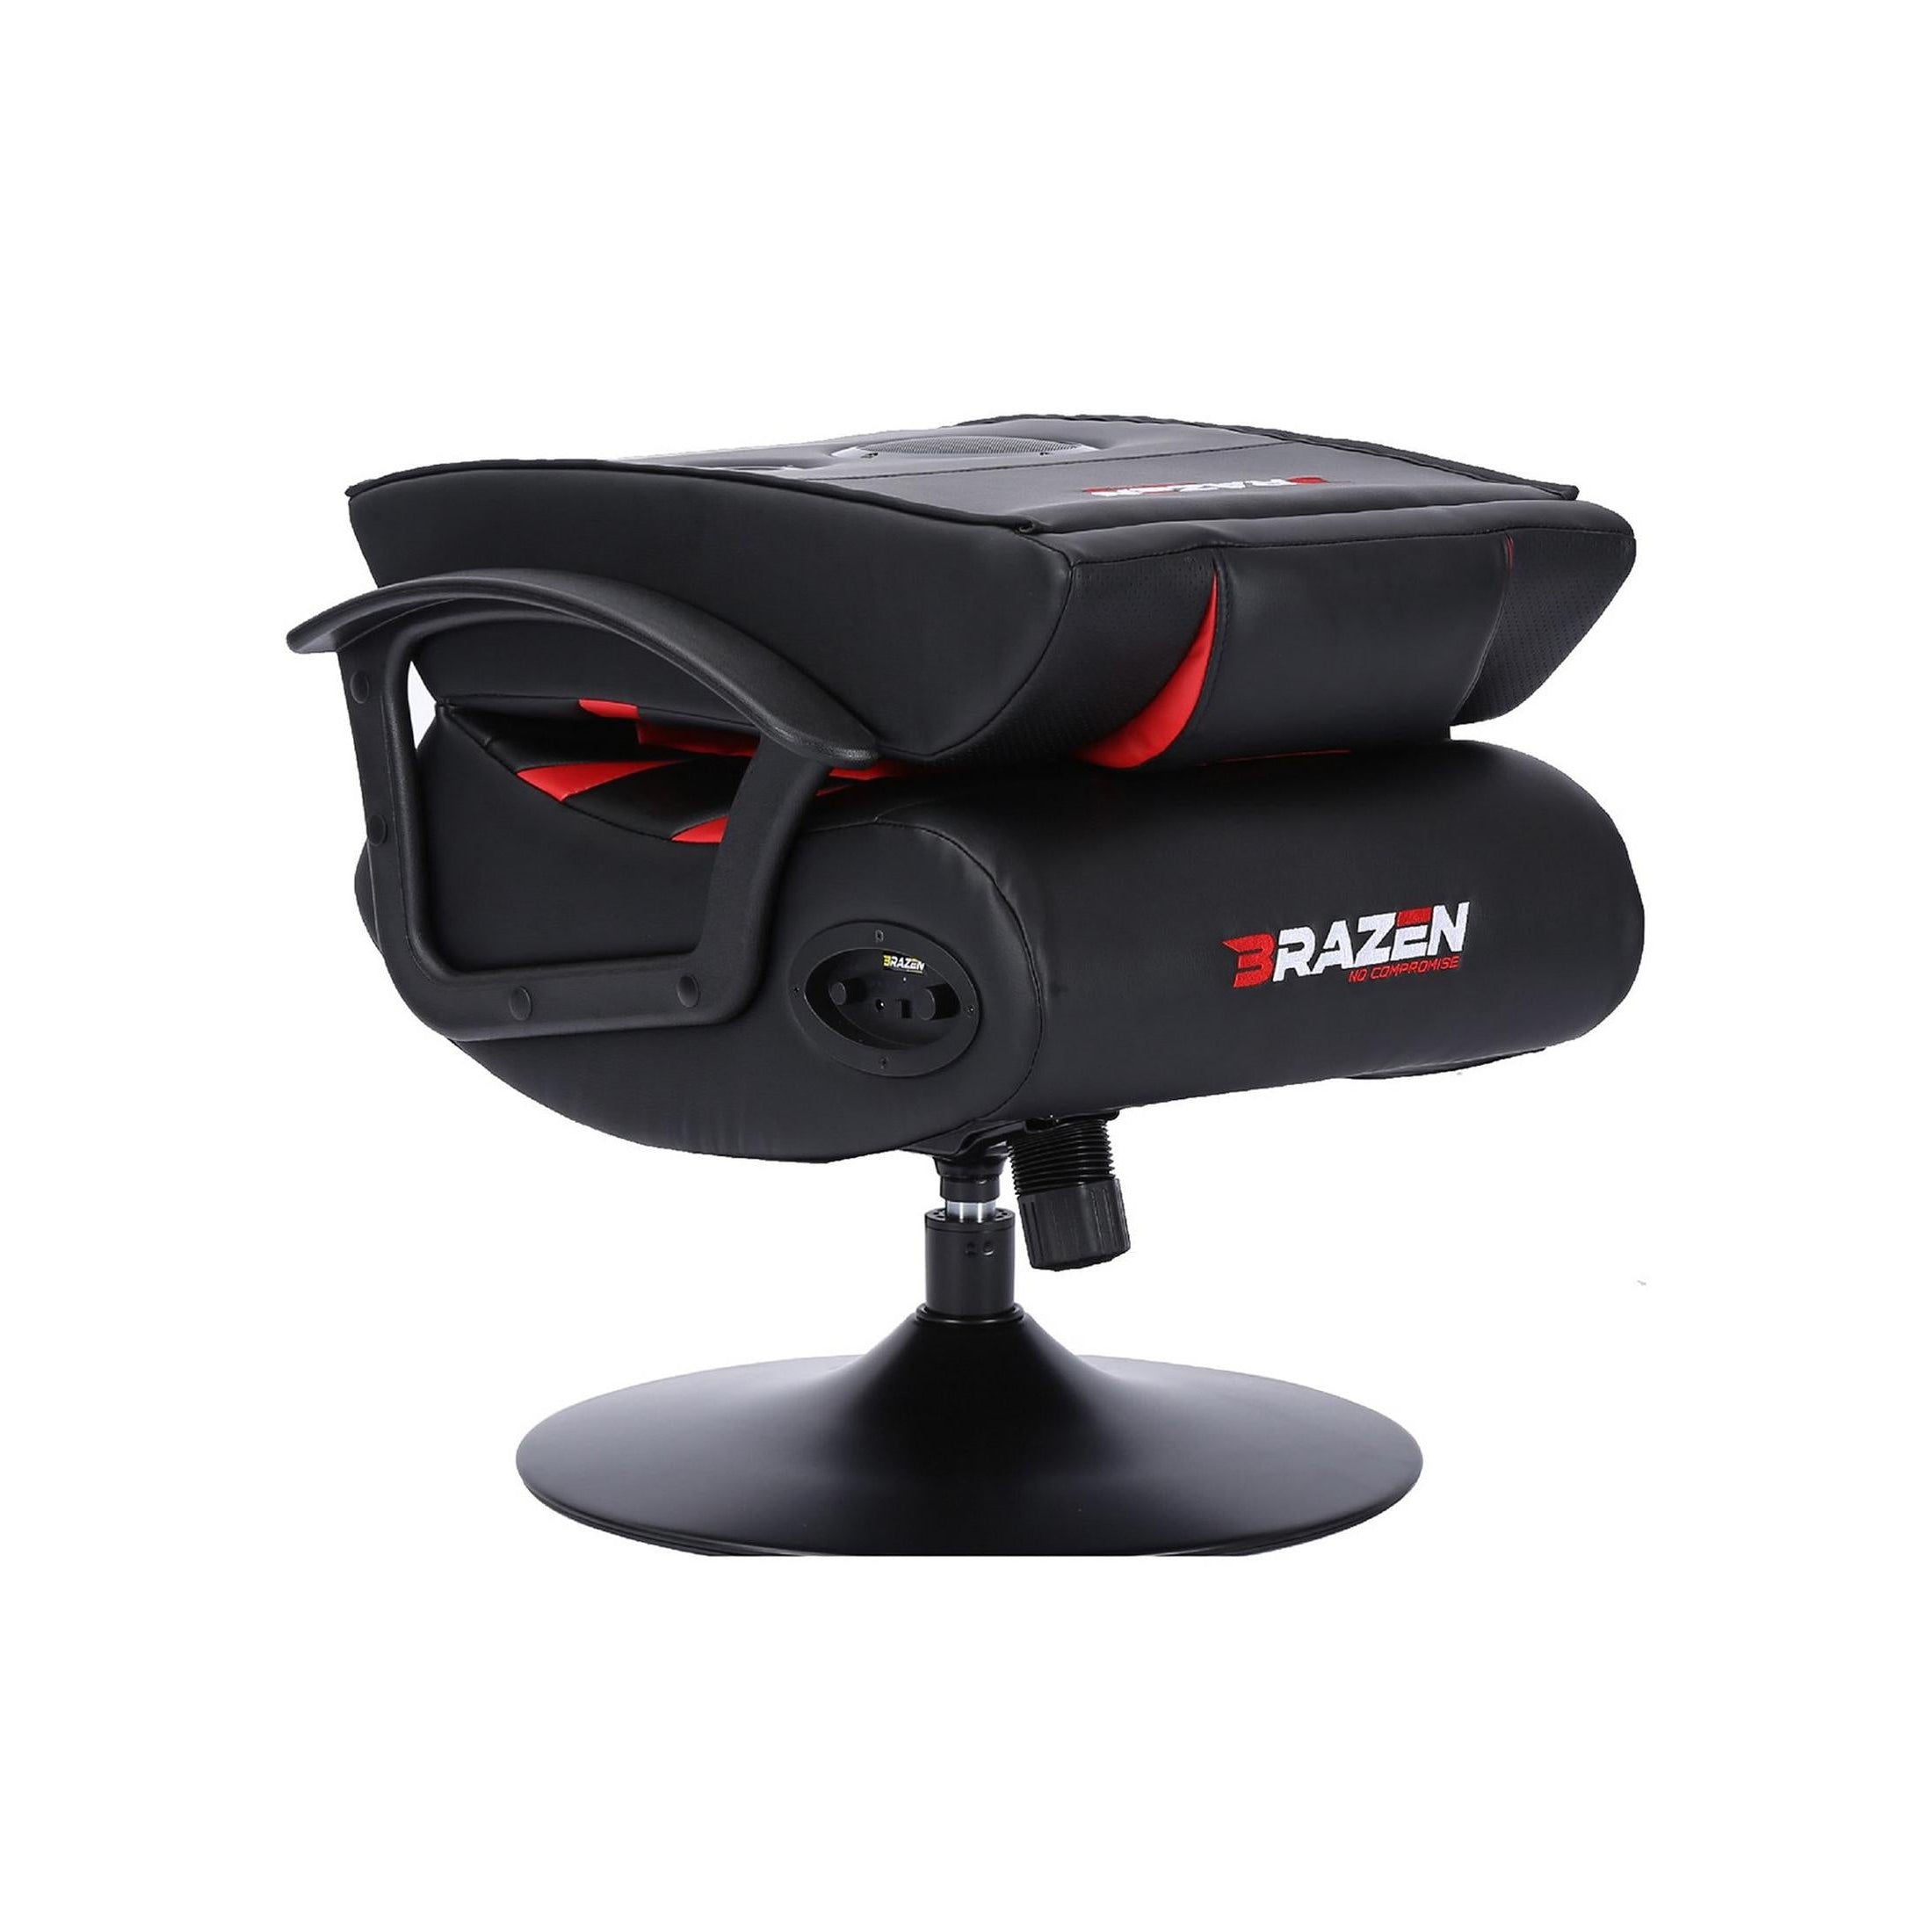 BraZen Pride 2.1 Bluetooth Gaming Chair - Black / Red